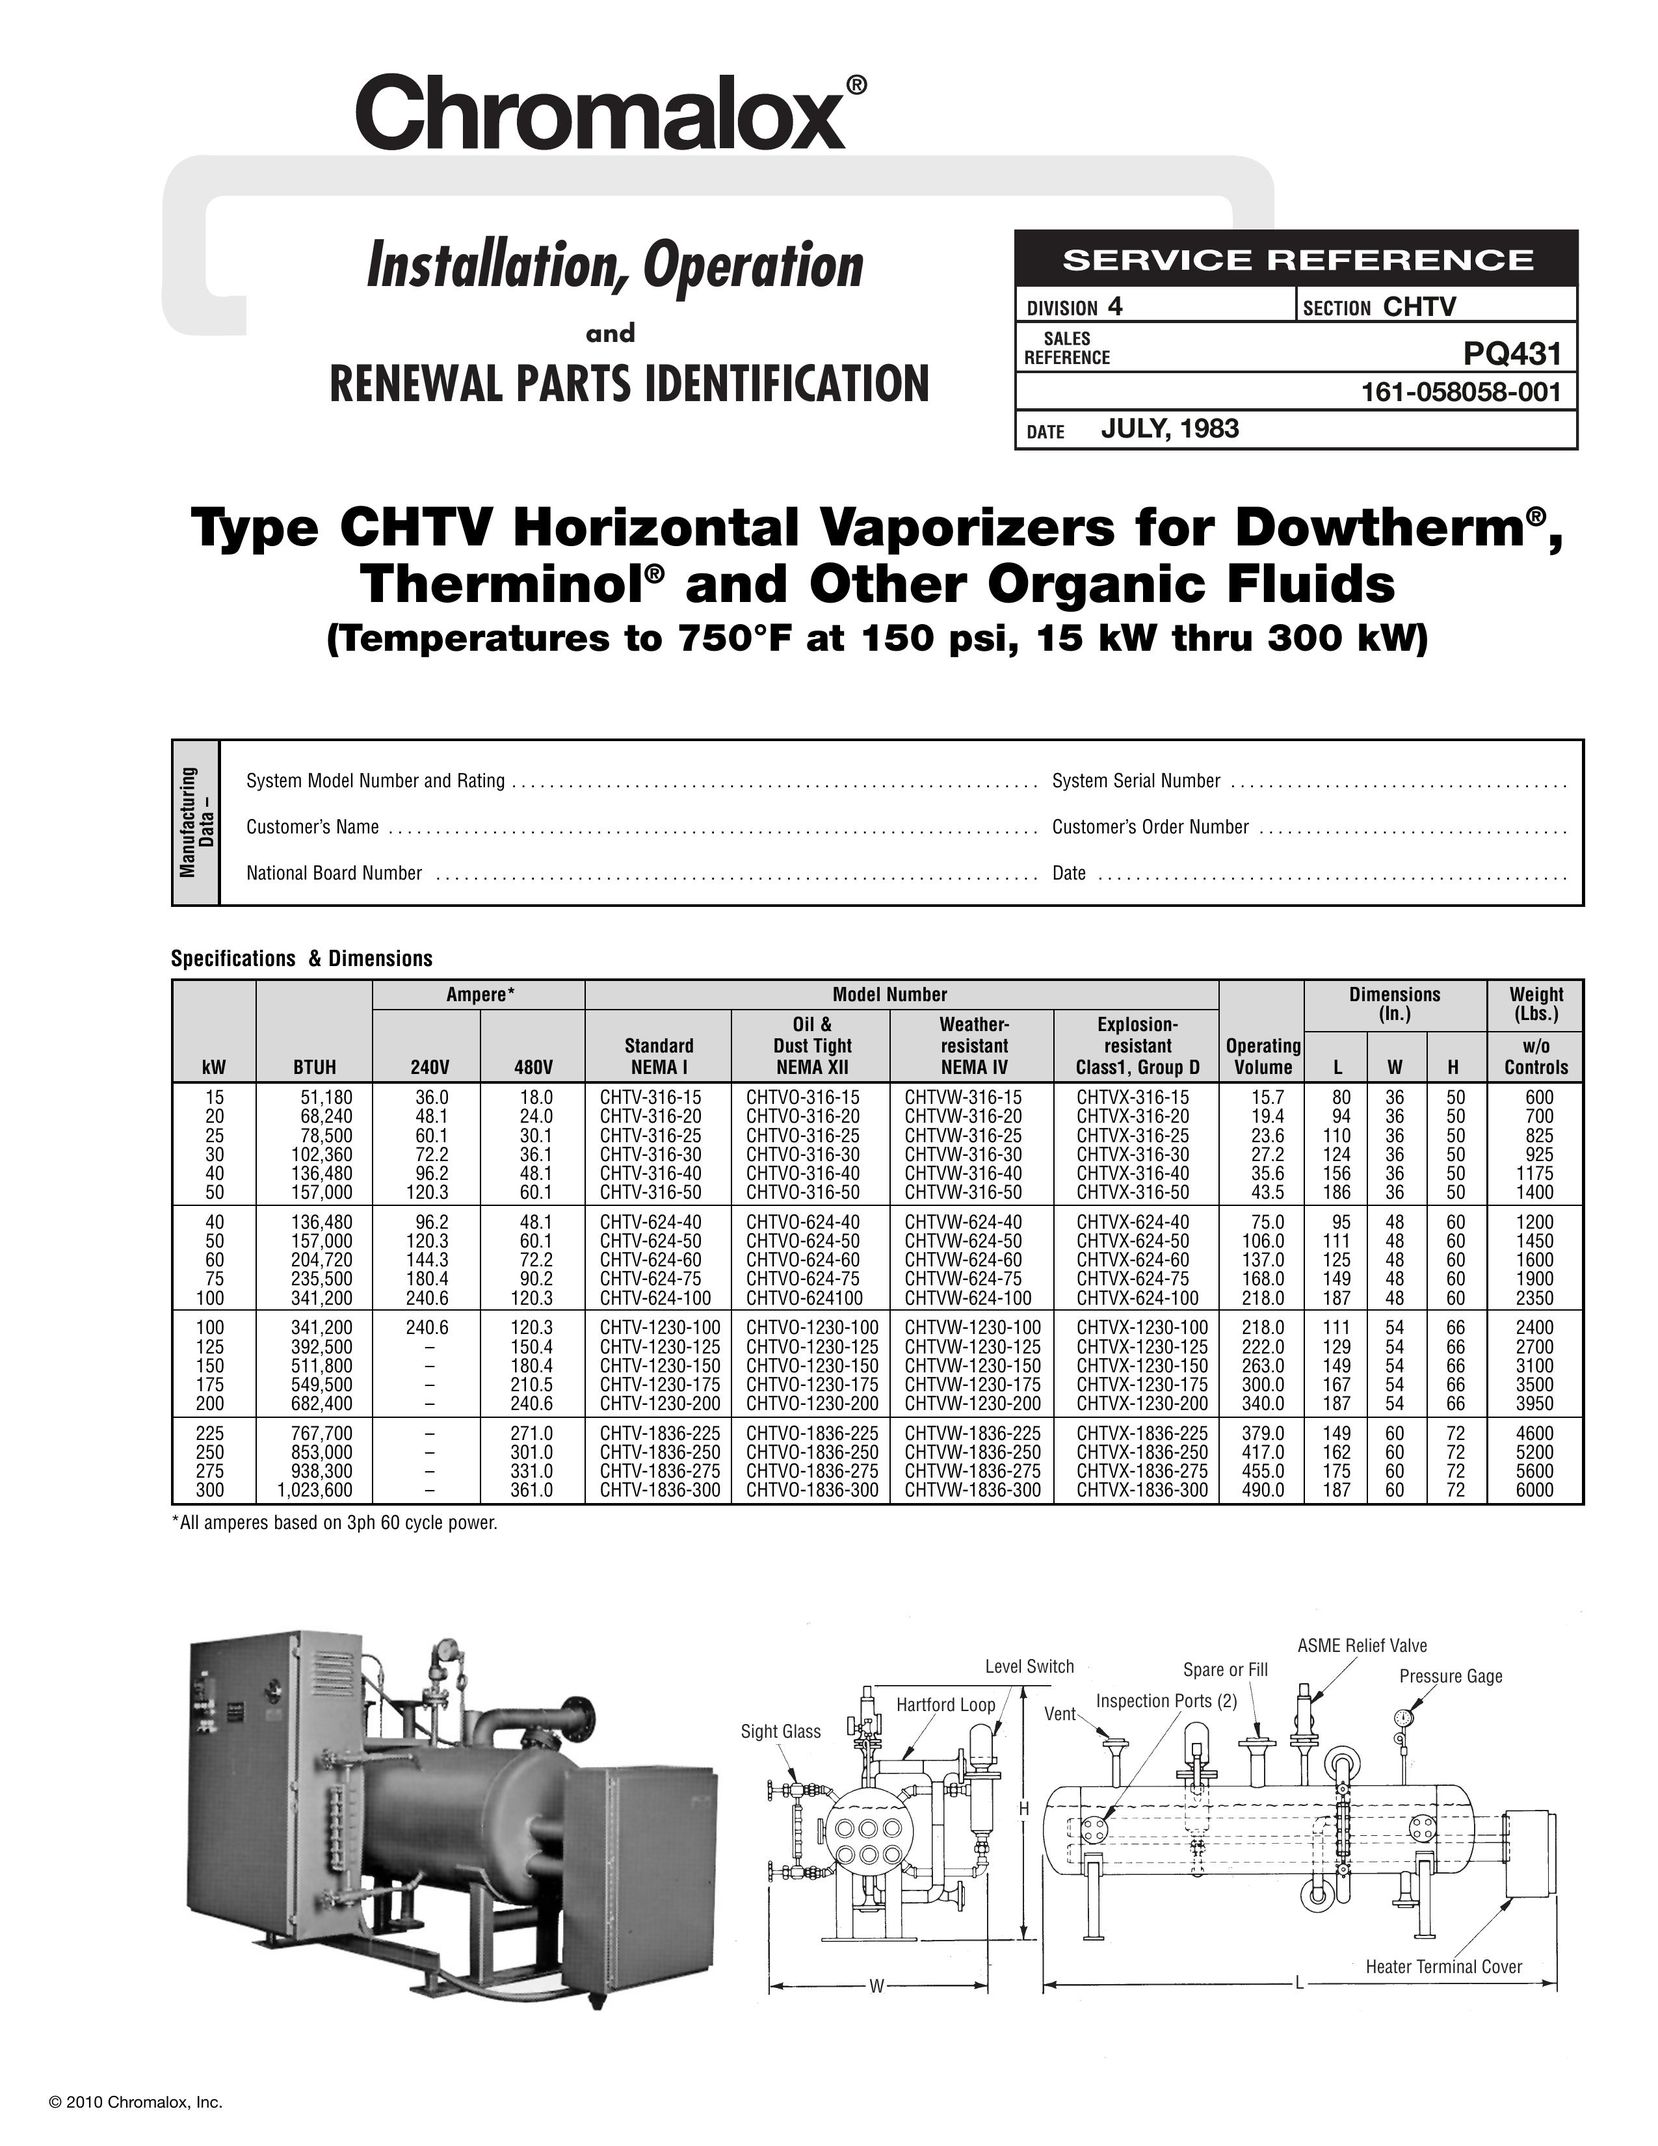 Chromalox PQ431 Humidifier User Manual